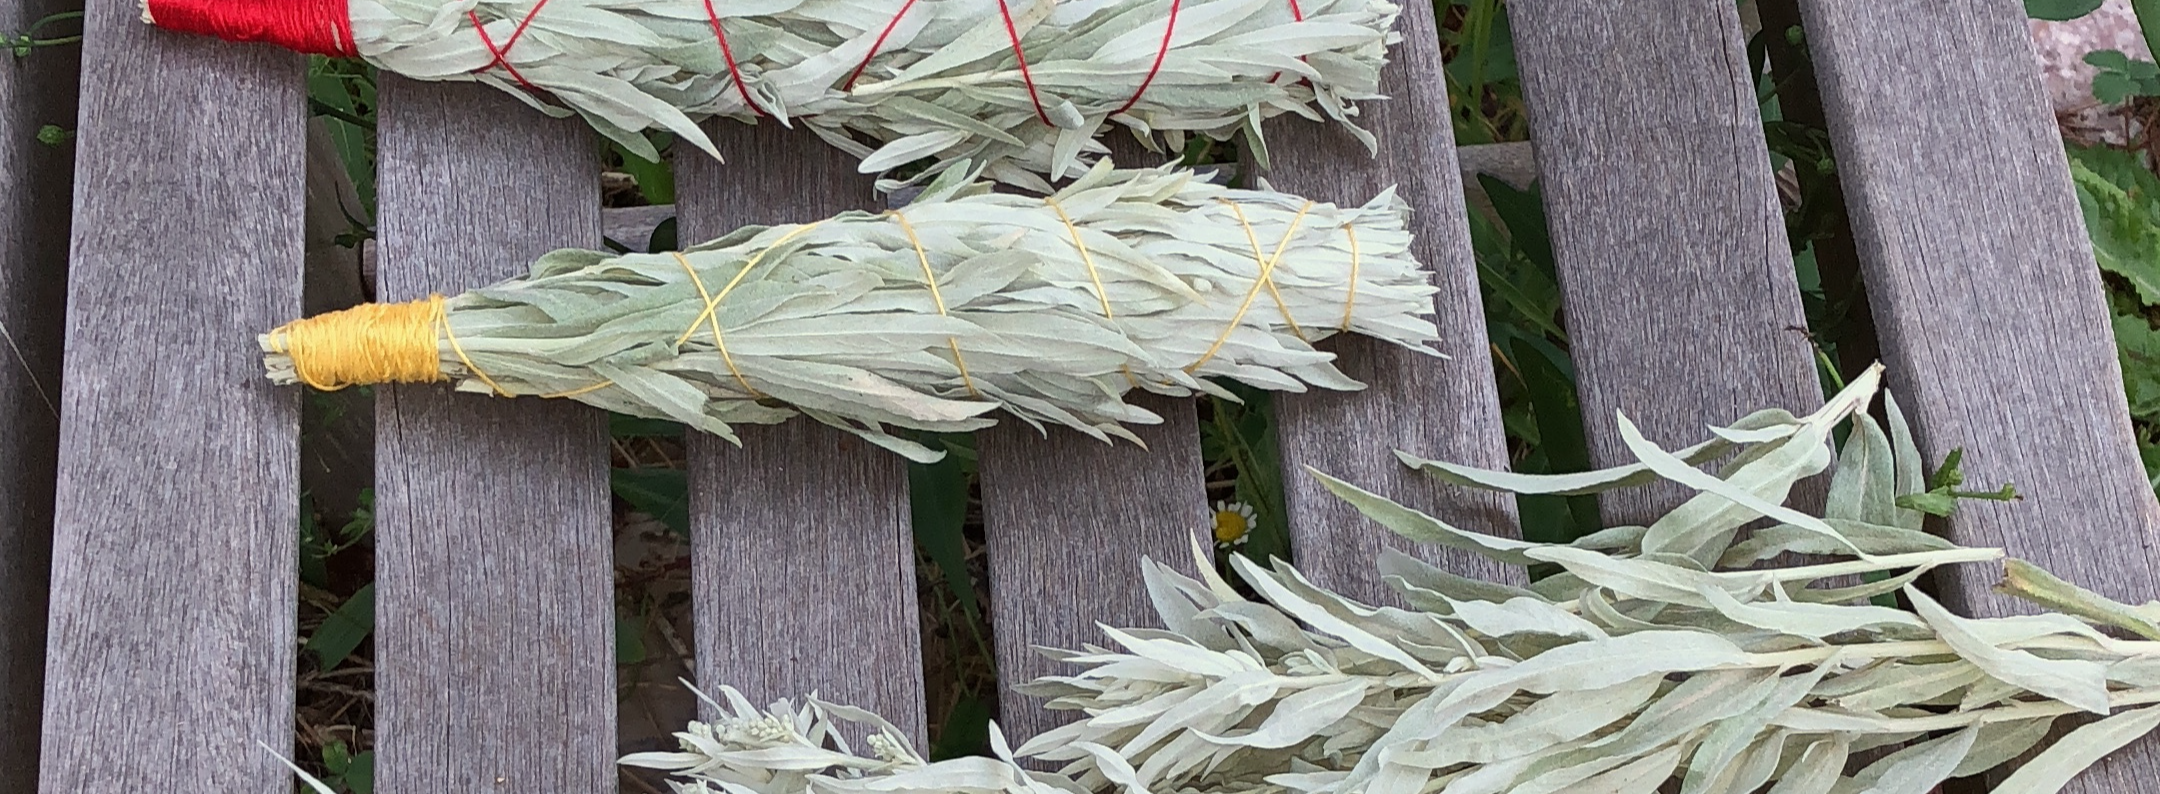 Bundles of sage lying on planks of wood